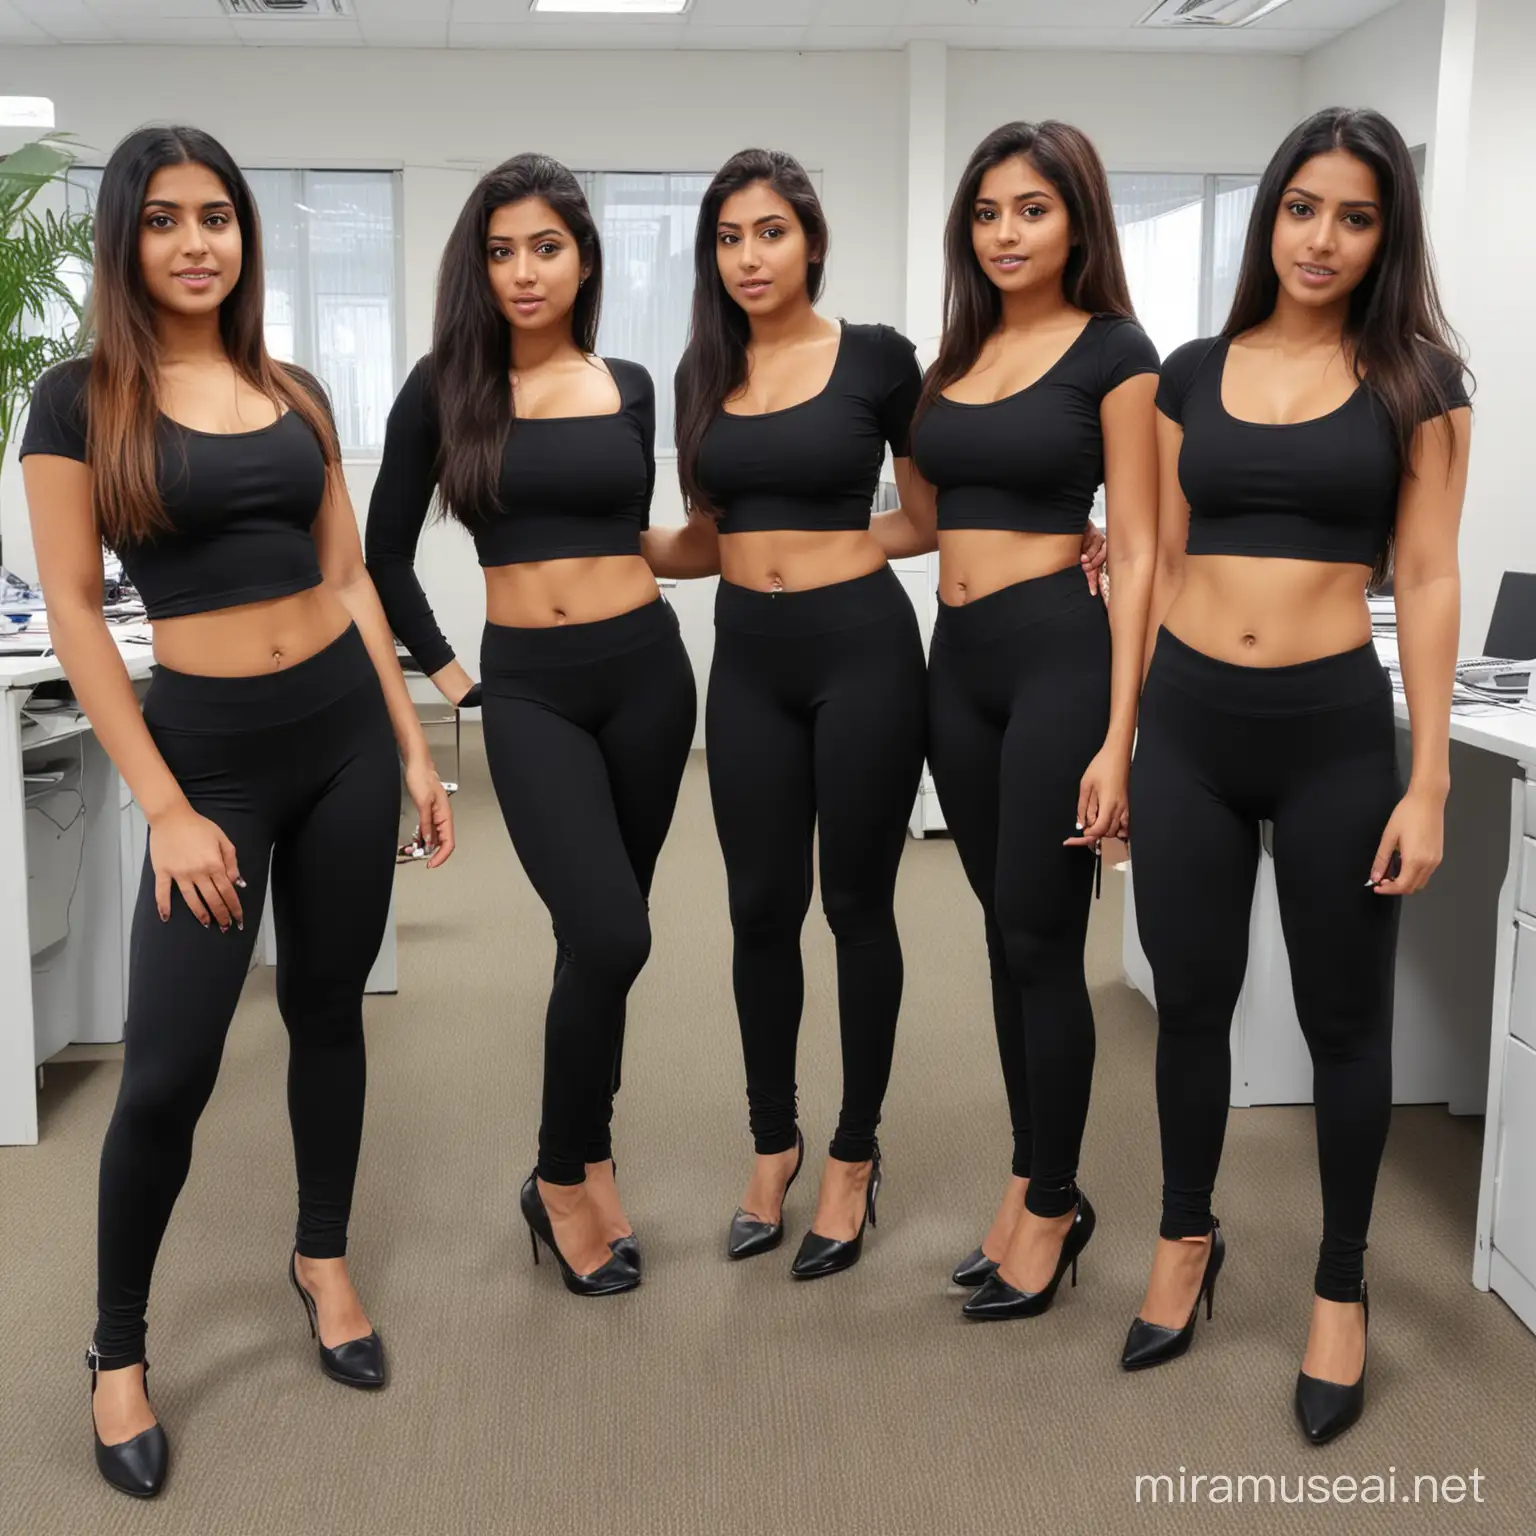 Indian Girls in Office Stylish Black Leggings Fashion Statement